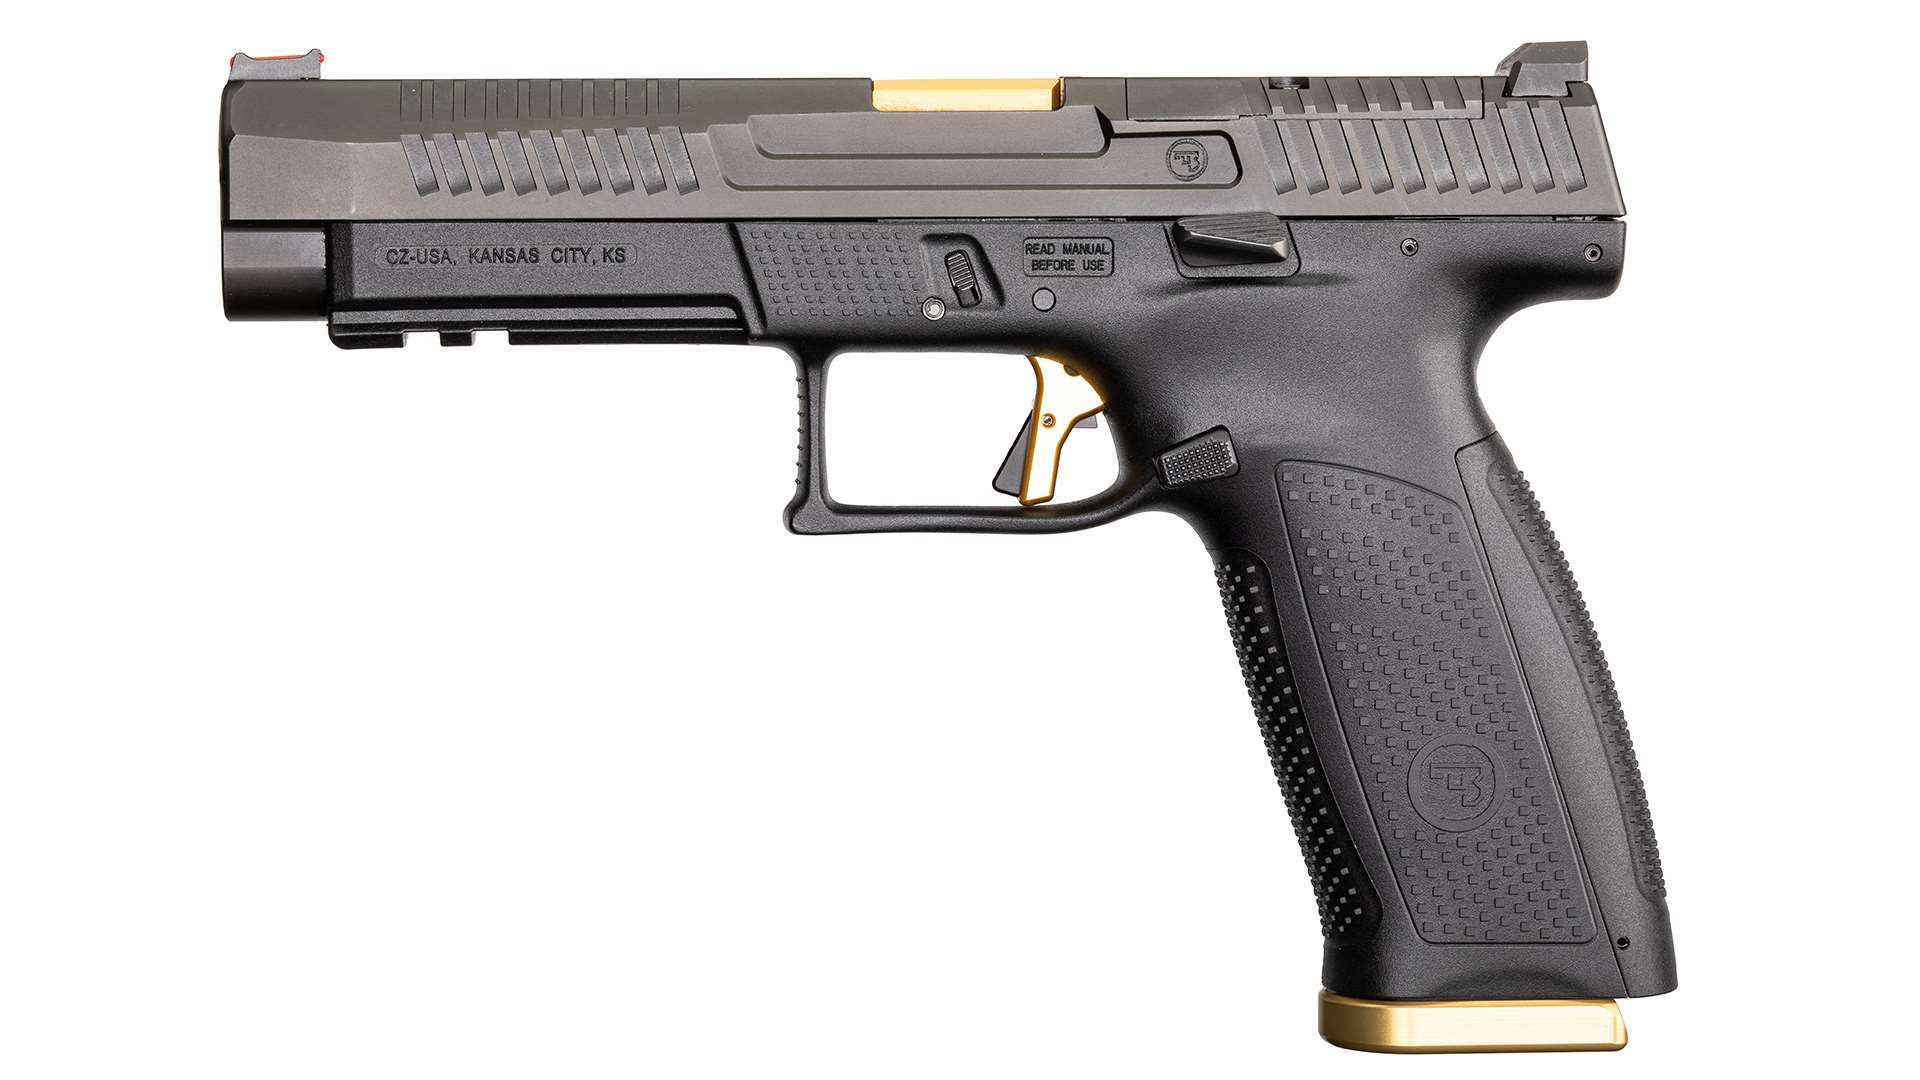 CZ-USA pistol